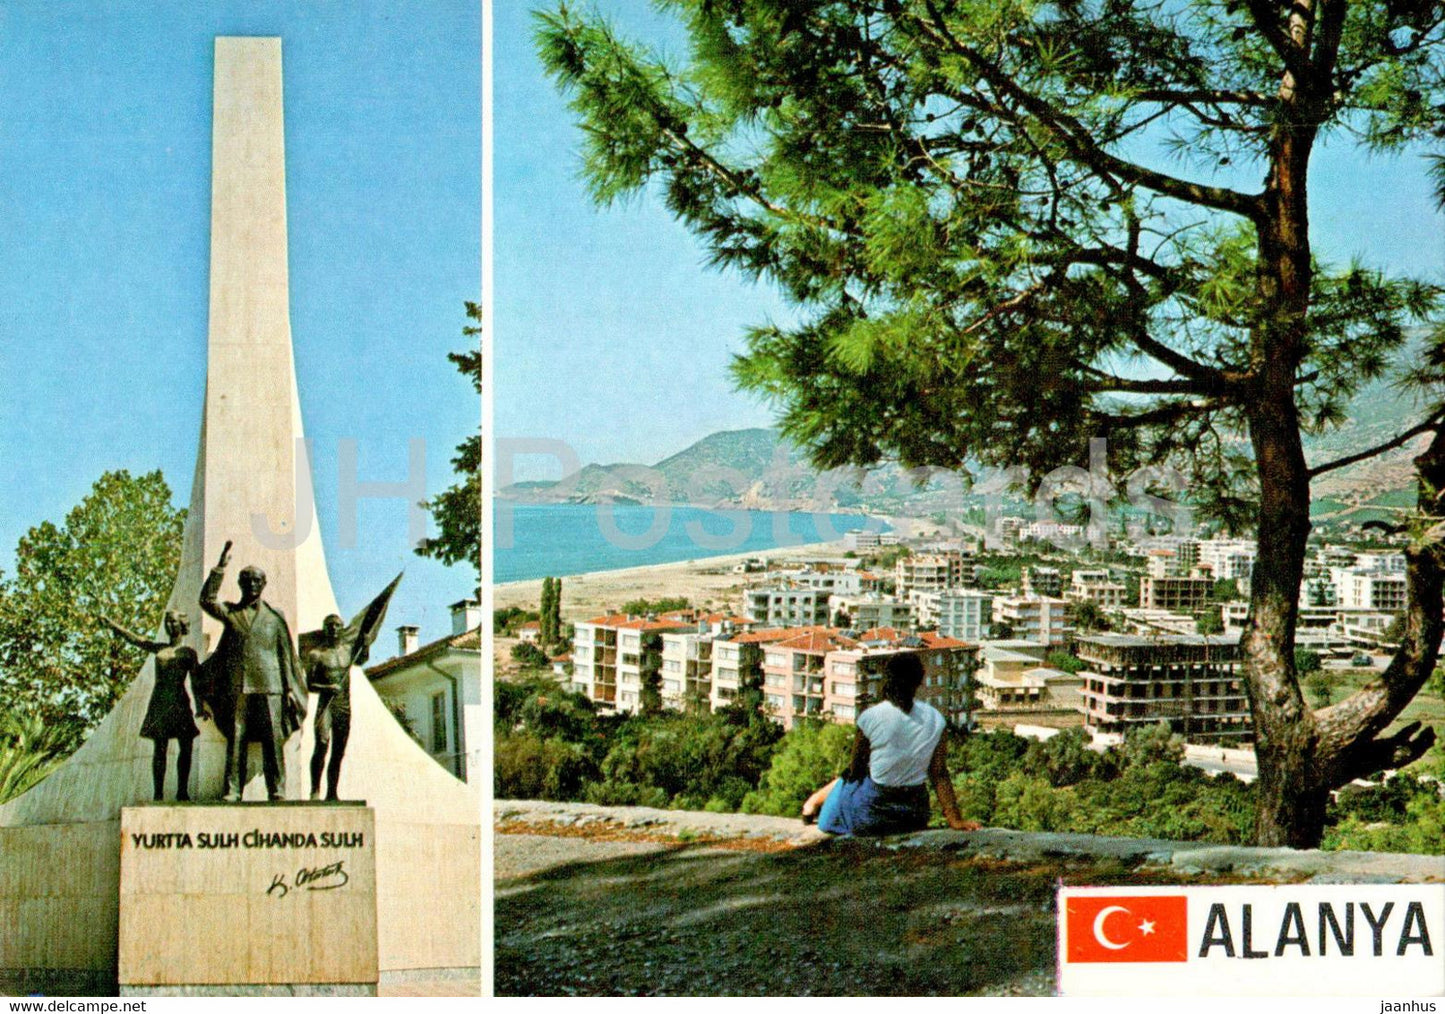 Alanya - Ataturk aniti ve kentten bir gorunum - Ataturk monument and a view from the city - Turkey - unused - JH Postcards